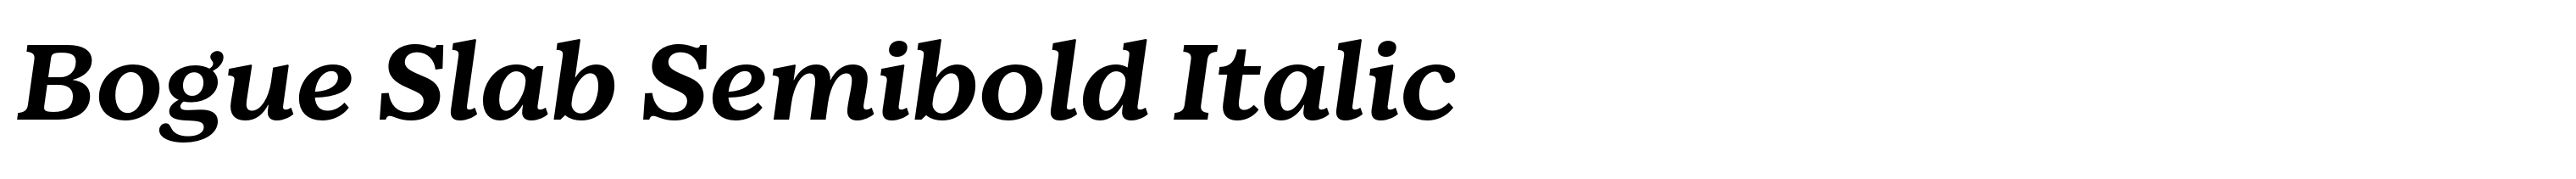 Bogue Slab Semibold Italic